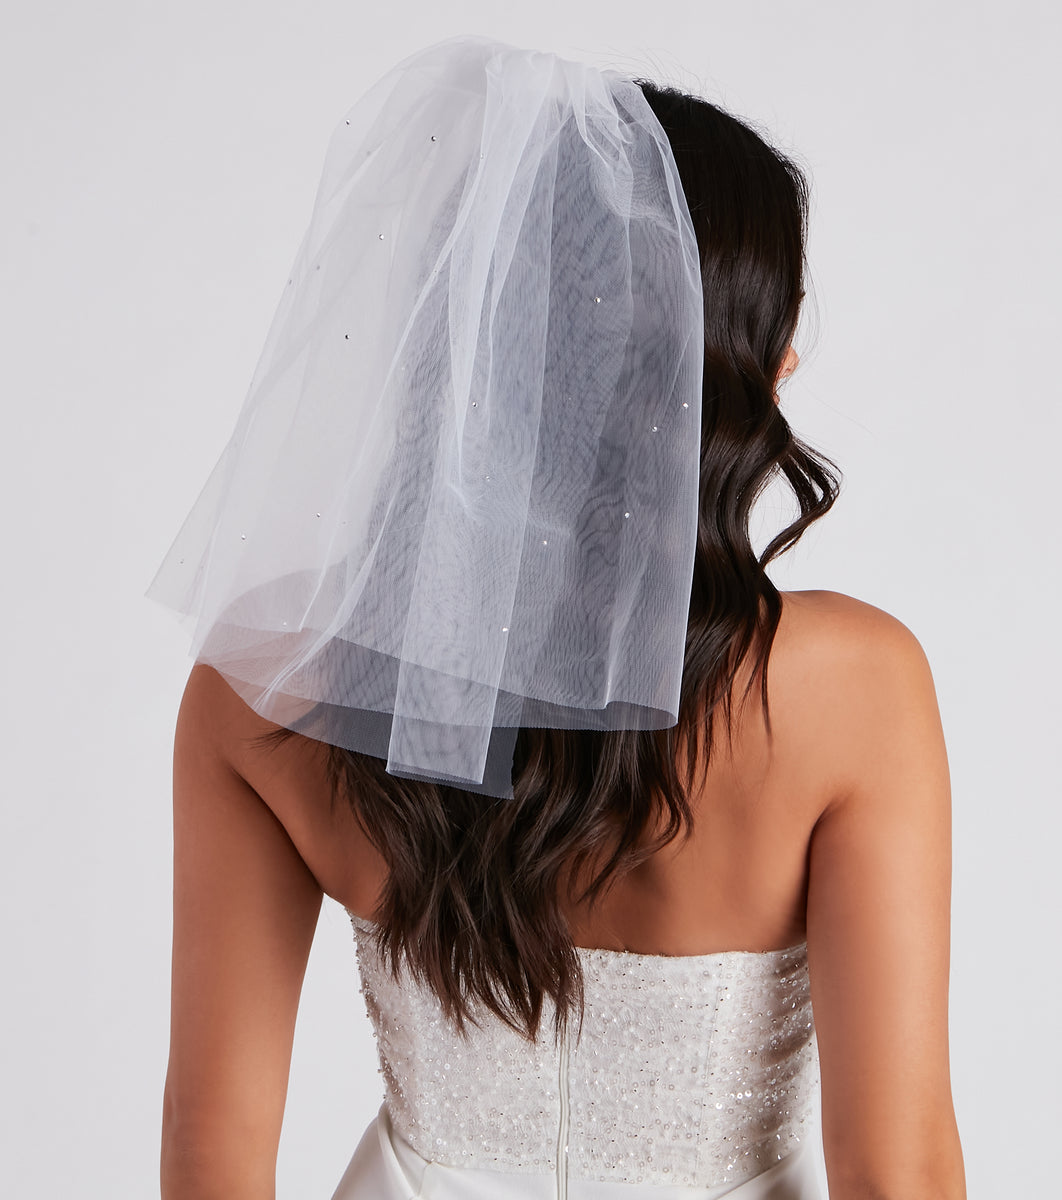 Bridal-Chic Rhinestone Veil